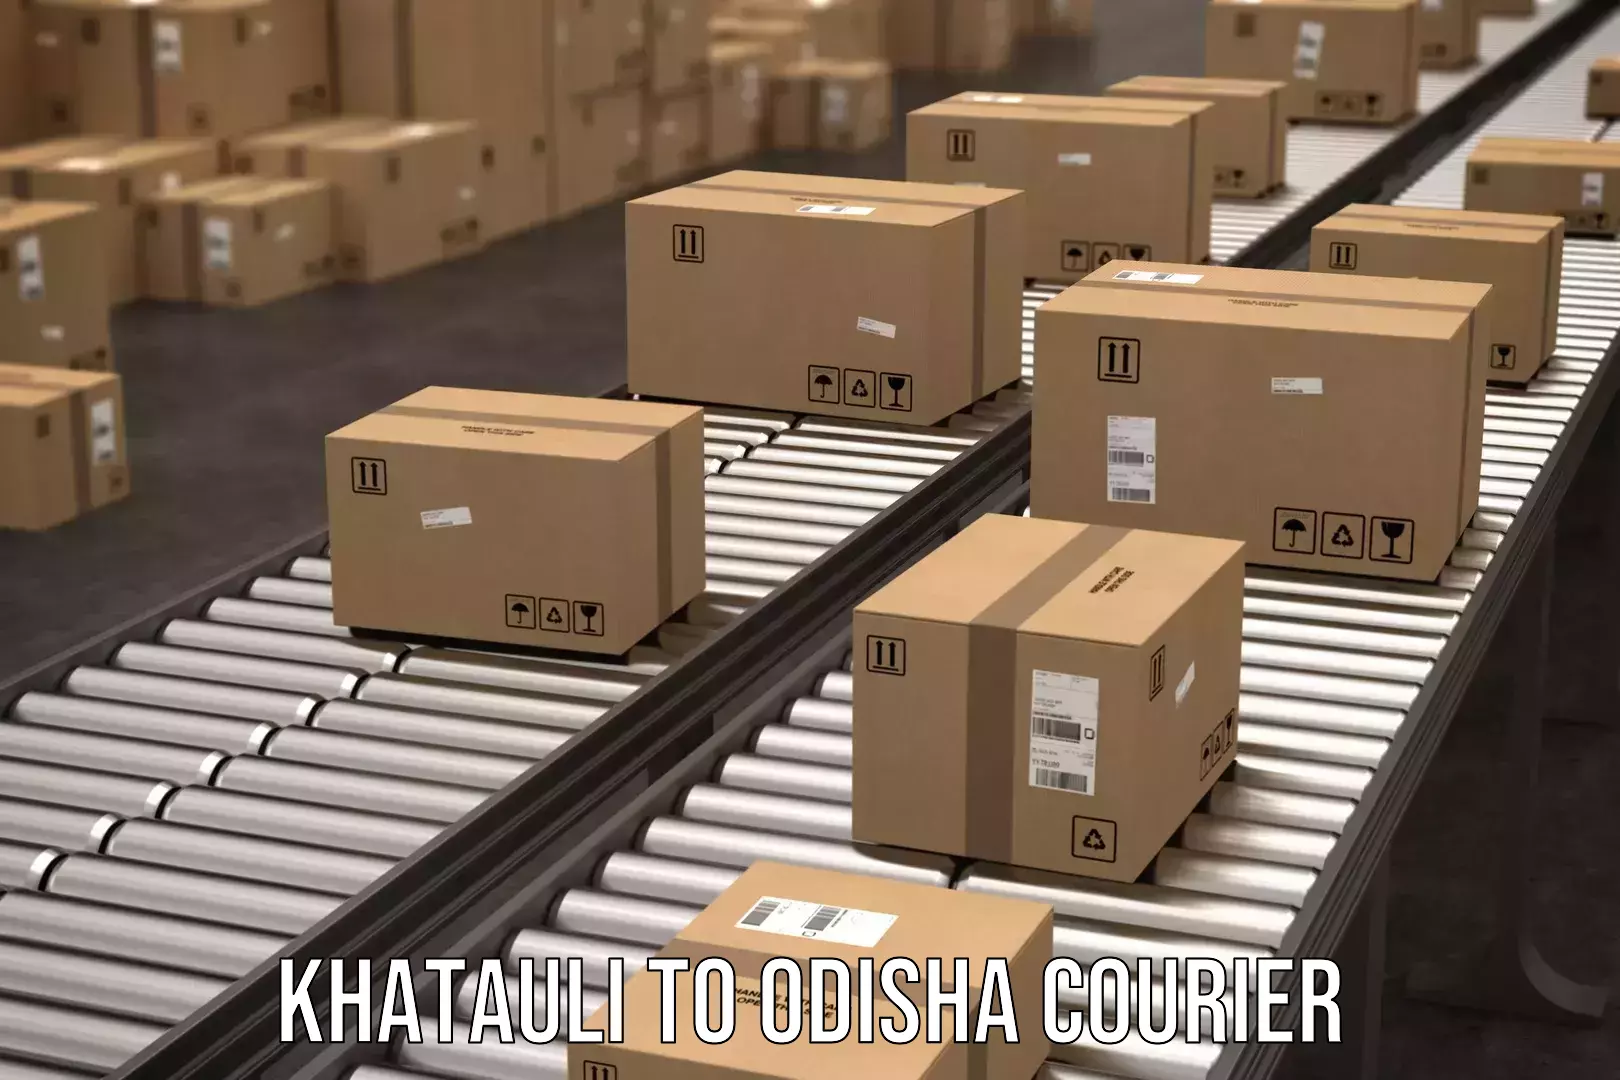 24/7 courier service Khatauli to Chandikhol